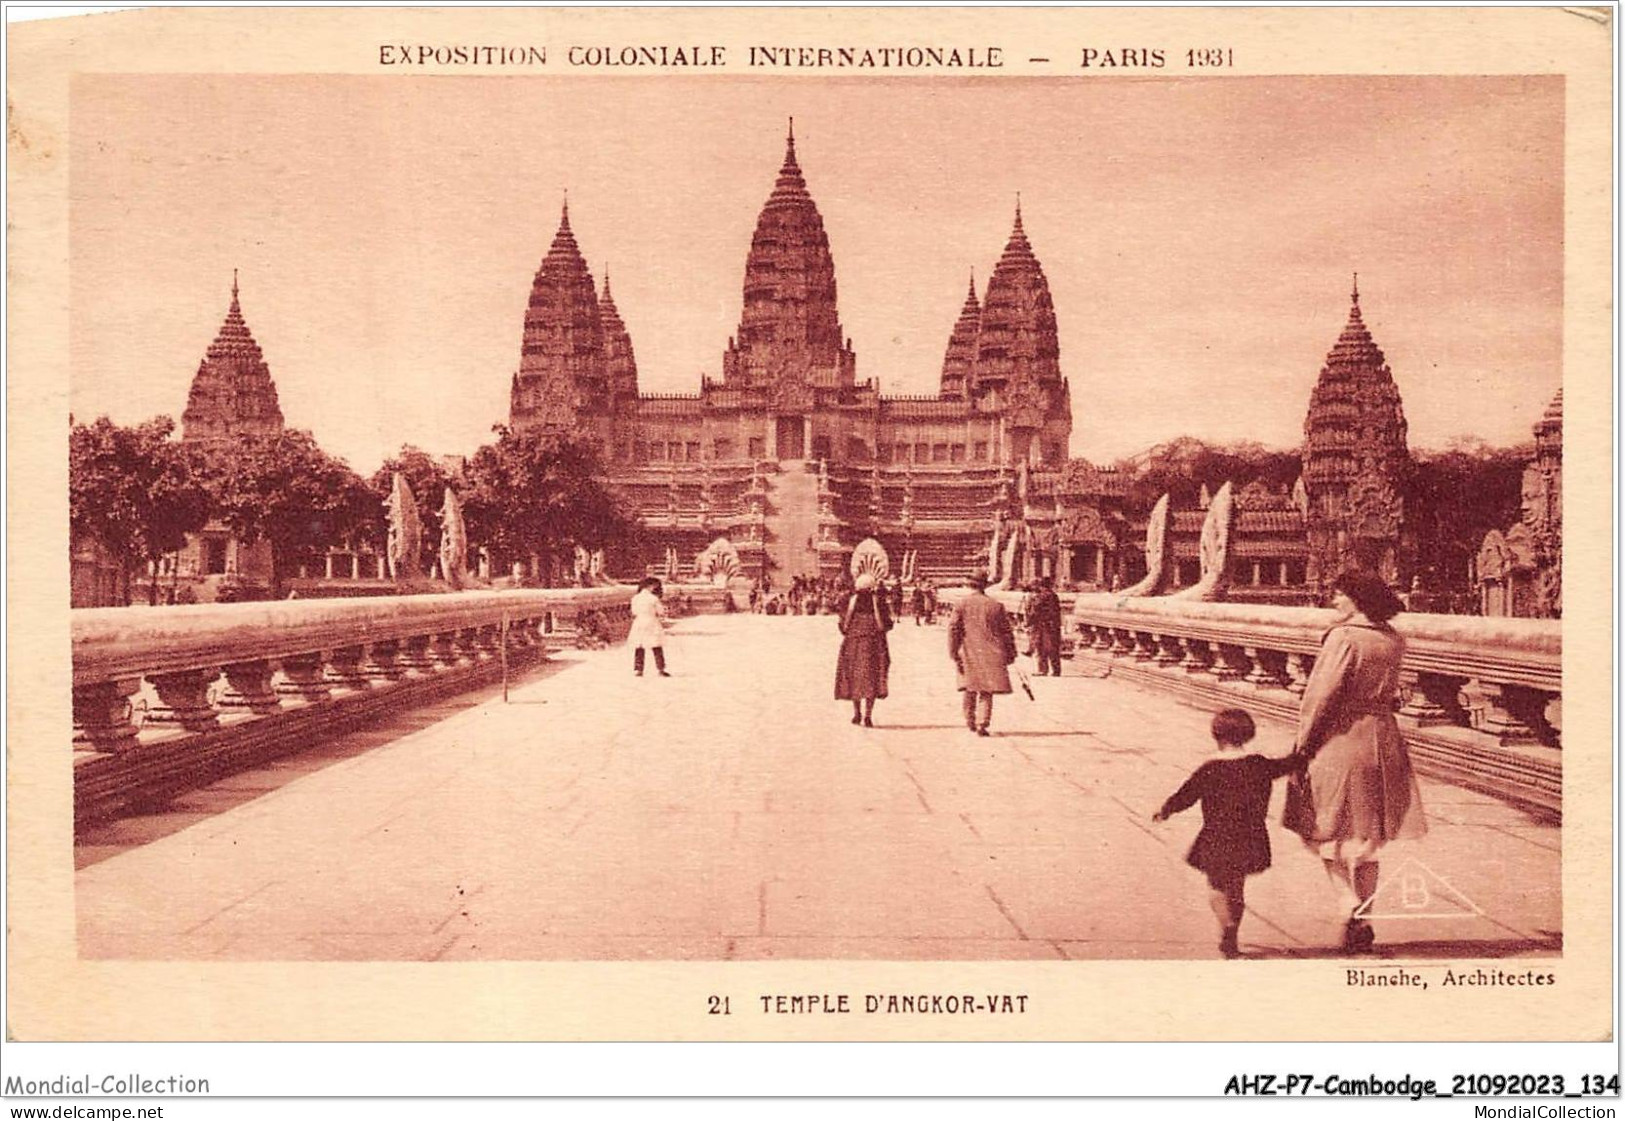 AHZP7-CAMBODGE-0663 - EXPOSITION COLONIALE INTERNATIONALE - PARIS 1931 - TEMPLE D'ANGKOR-VAT - Cambodge